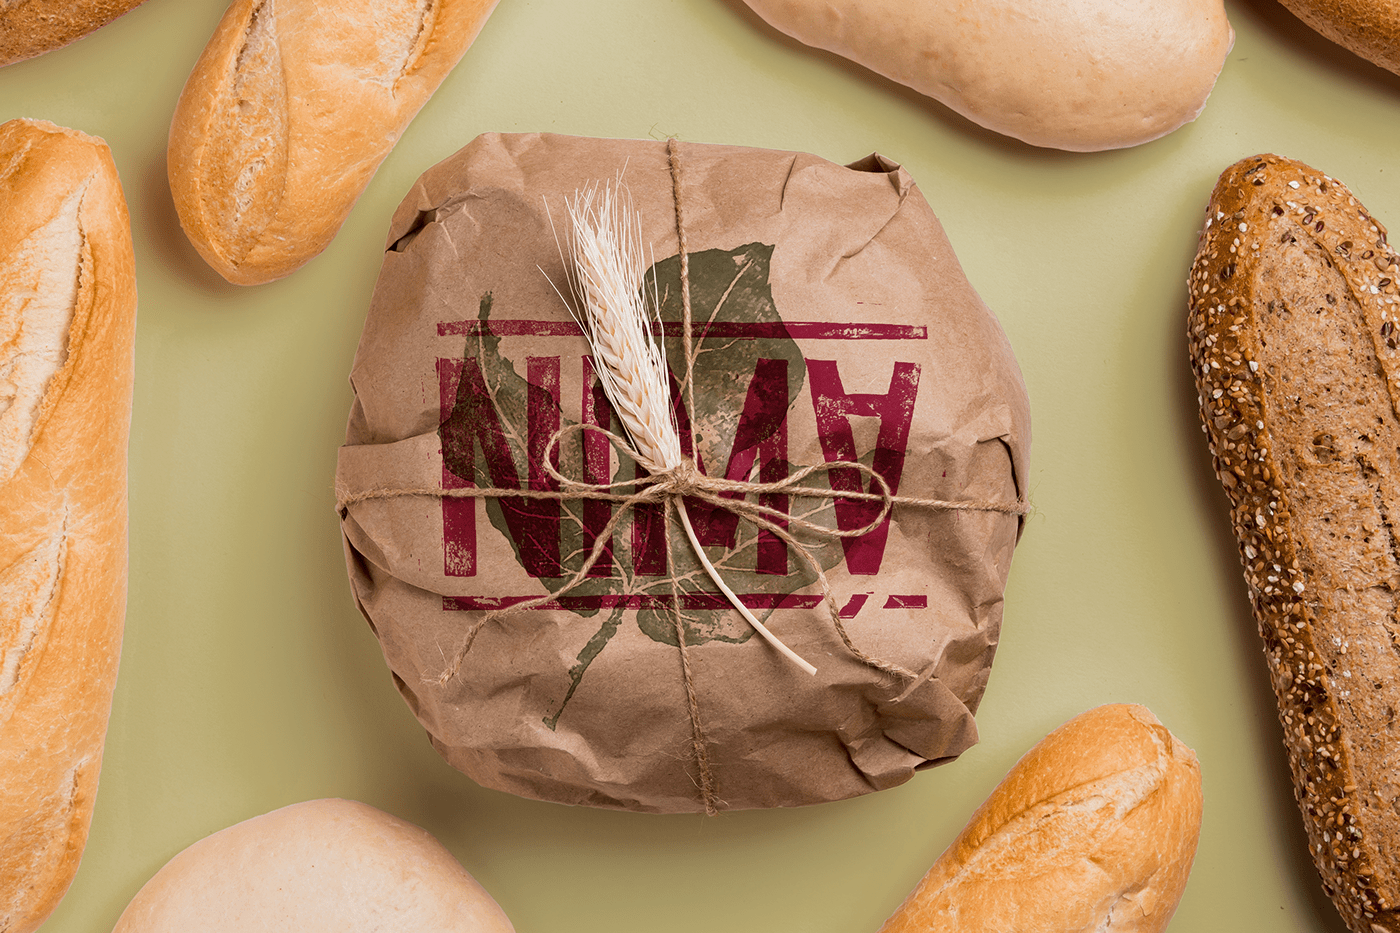 artisan bread colombia david espinosa linocut Logo system monteria Nicolás peñuela Nima Type Sailor